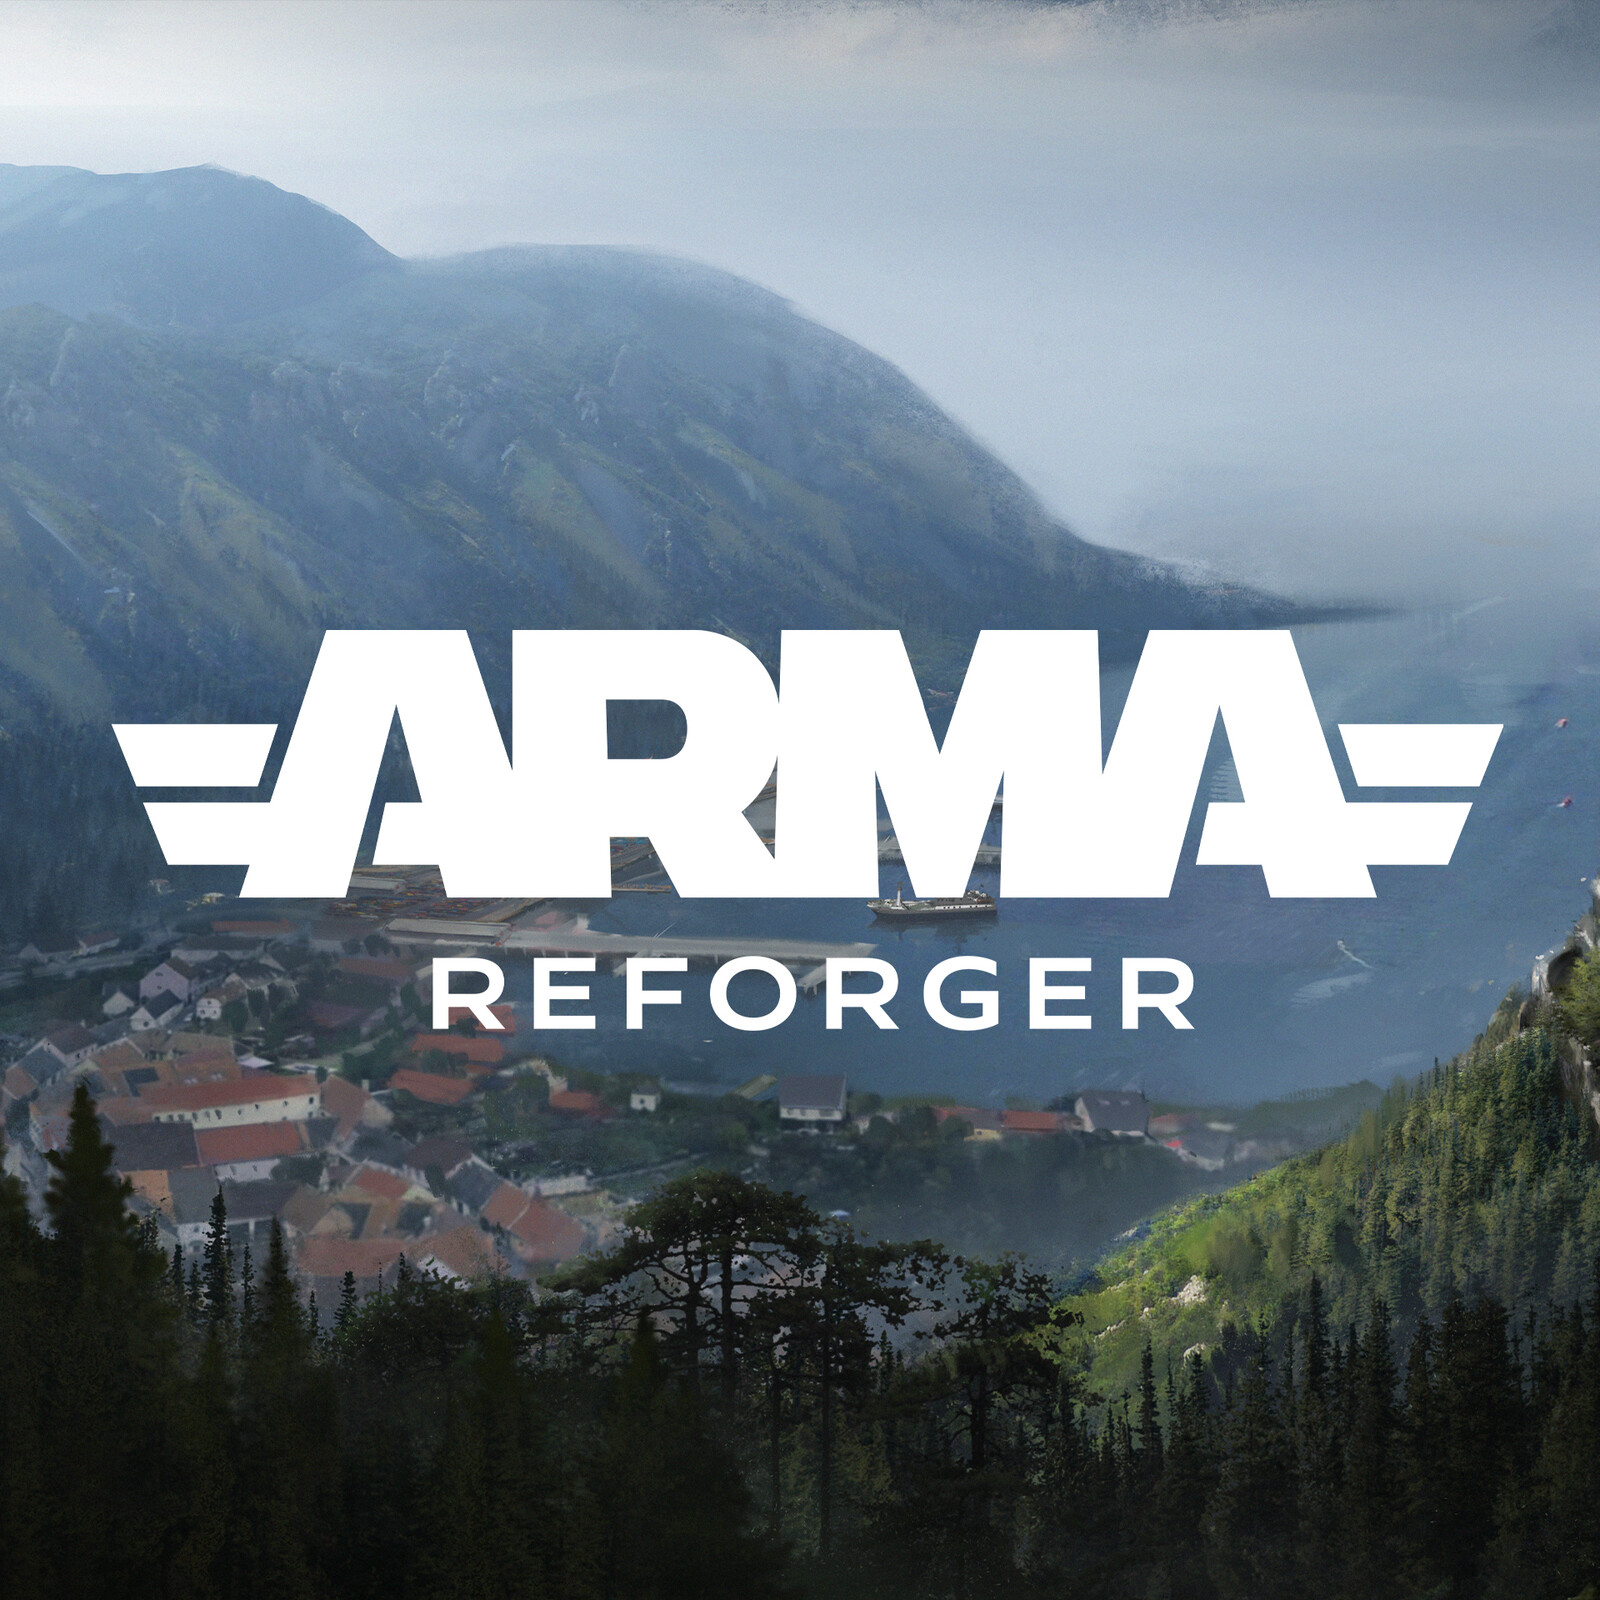 ARMA REFORGER - Everon region concept - Wild south